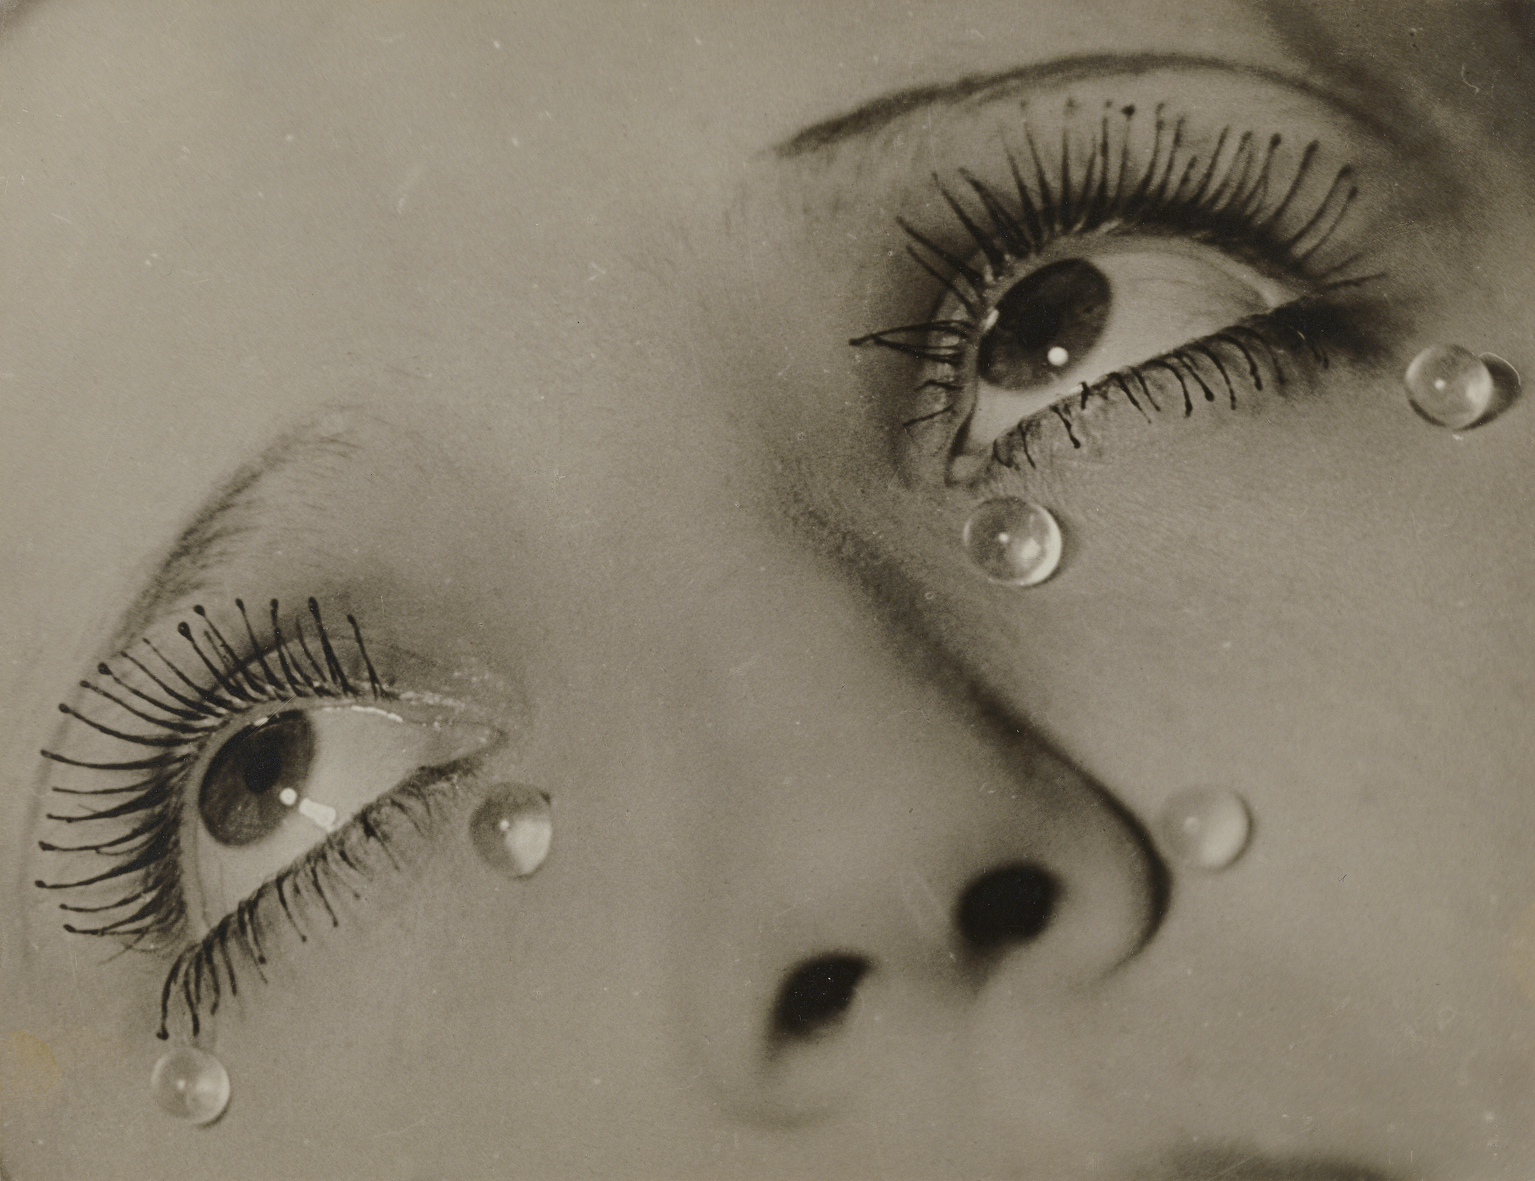 Larmes (Tears); Man Ray, American, 1890 - 1976; Paris, France, Europe; 1930 - 1932; 